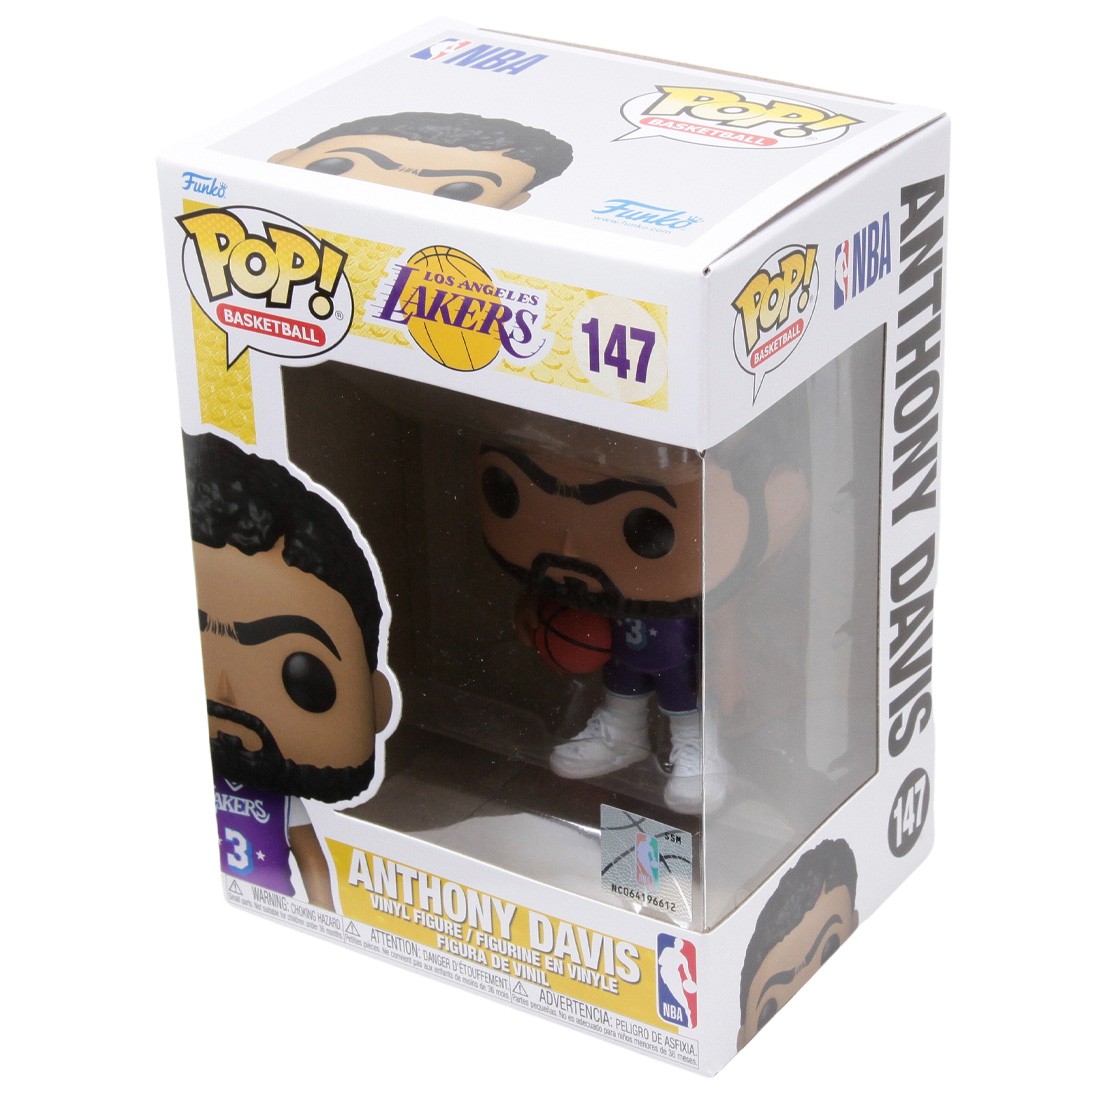 Funko POP Basketball NBA LA Lakers - Anthony Davis 21-22 City Edition  (purple)